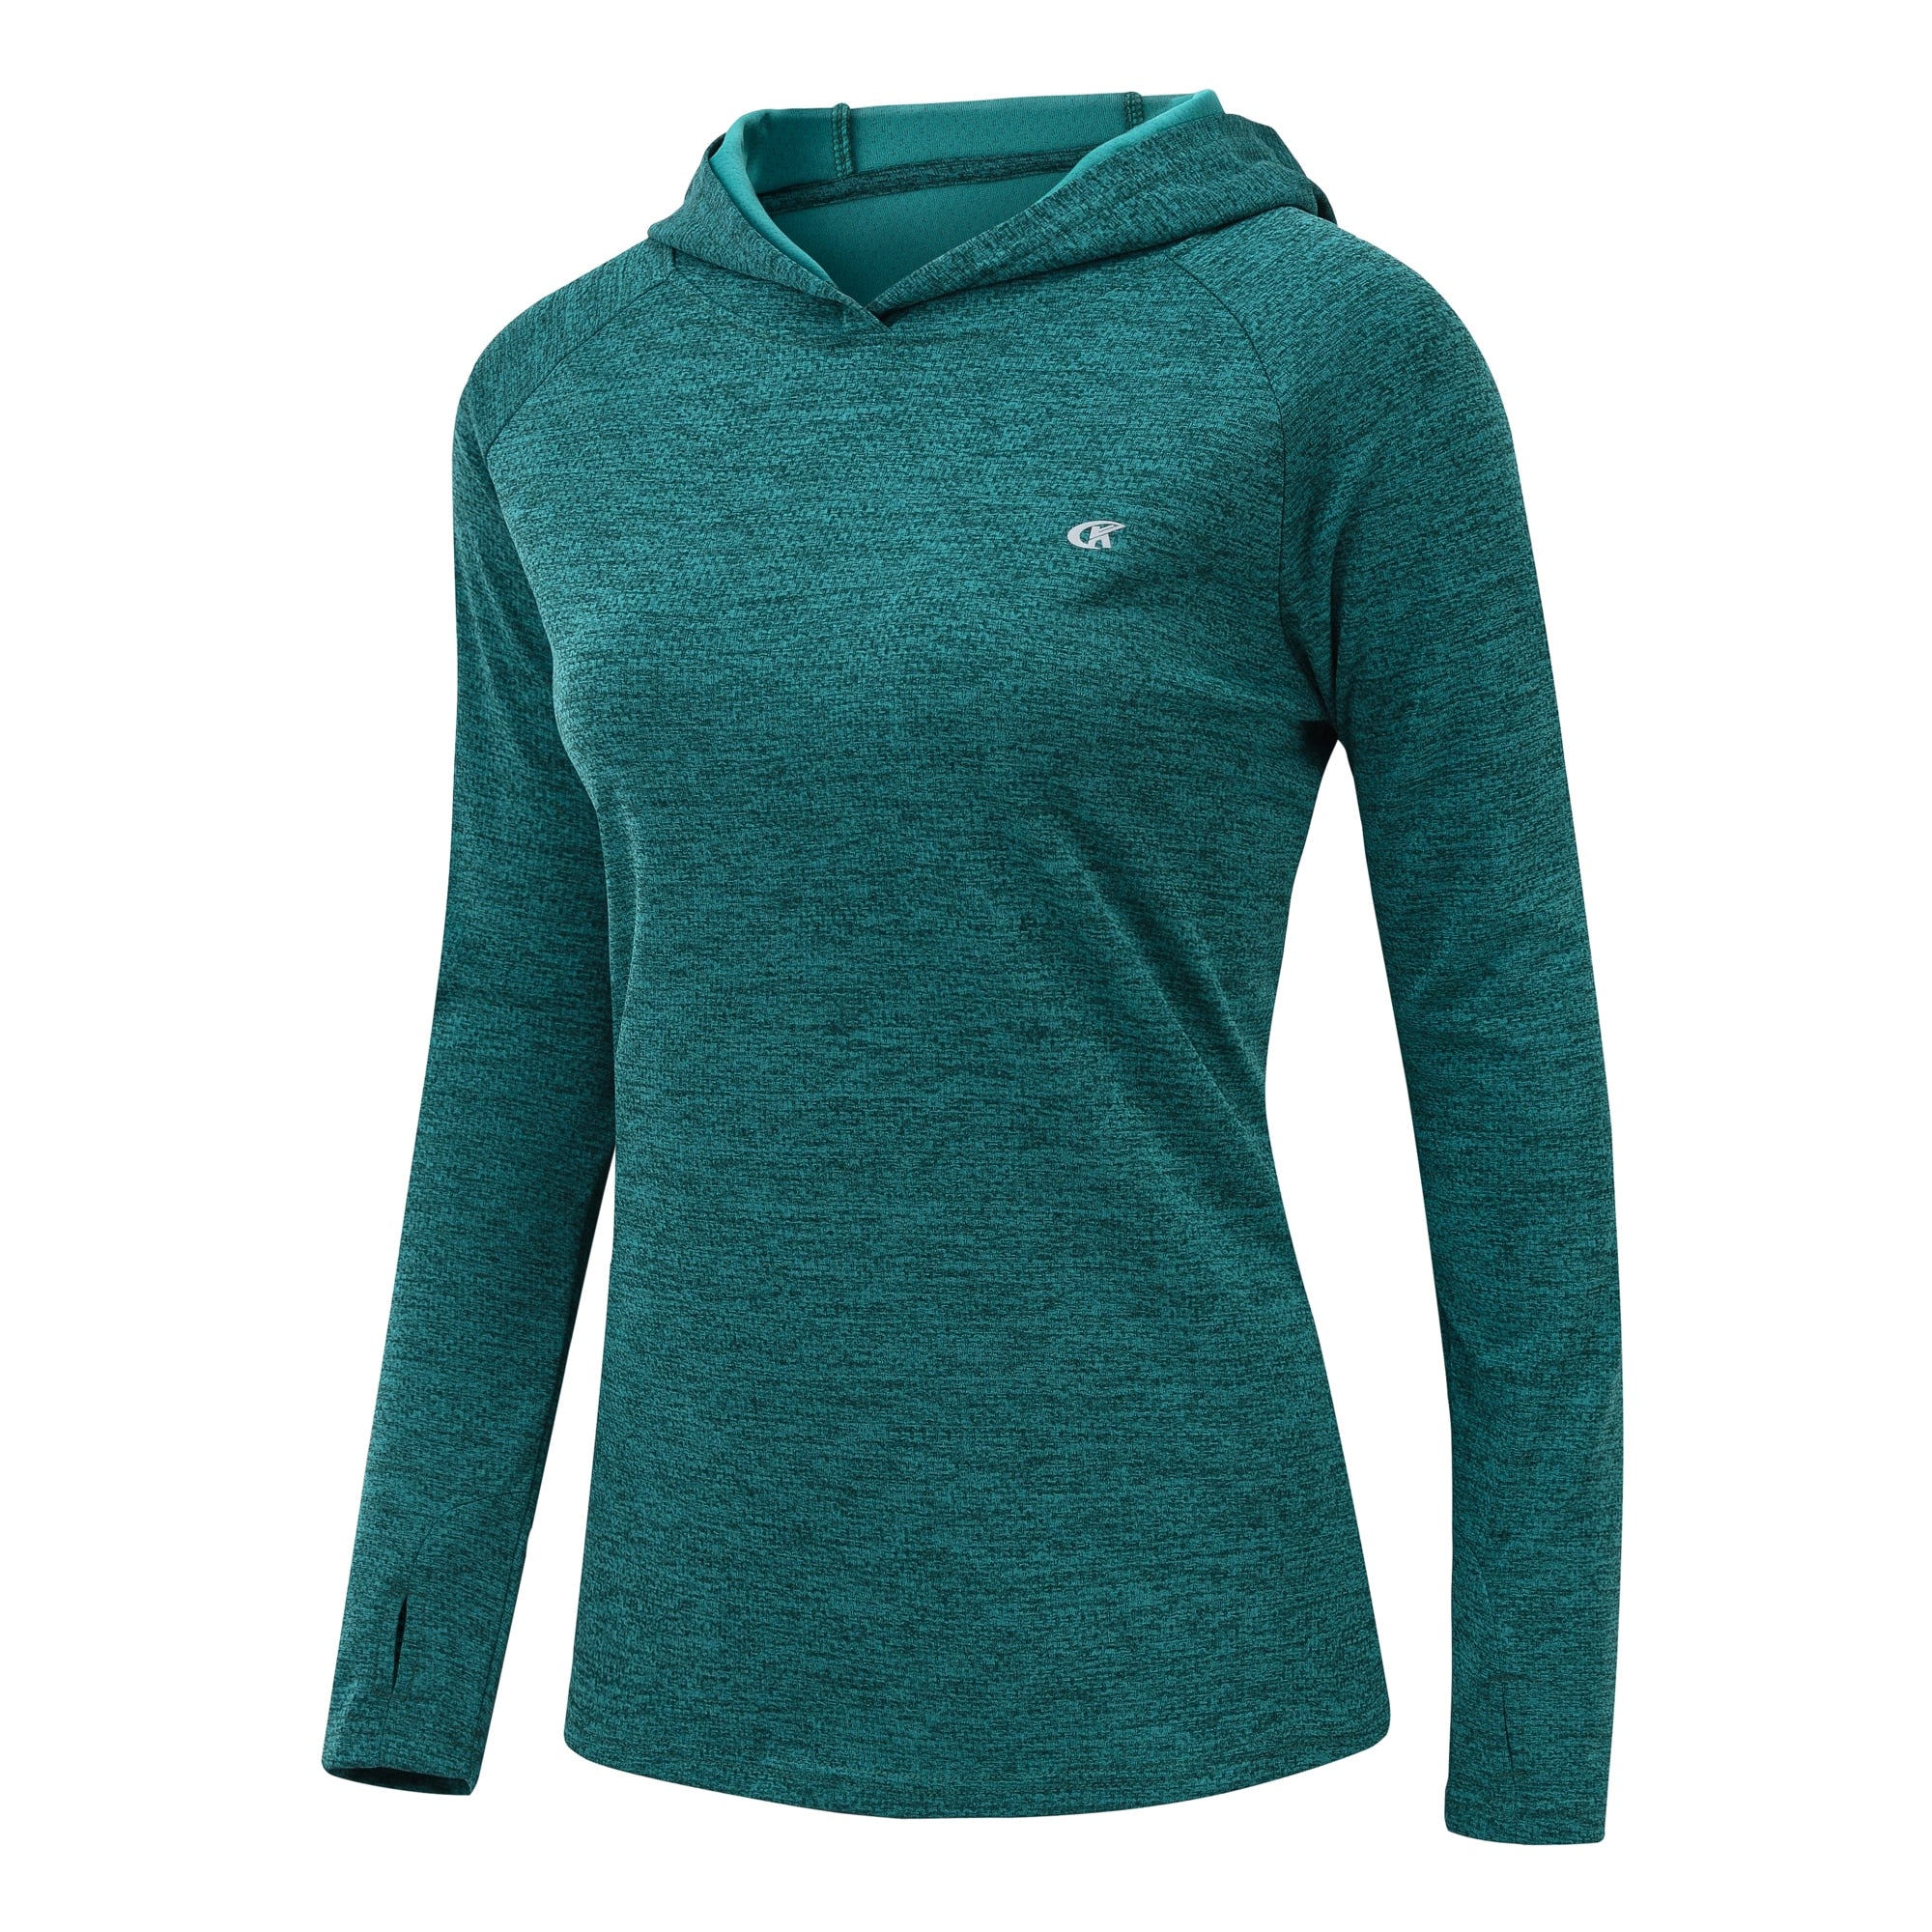 Acheter blackishgreen Hiking and Running Long Sleeve T-Shirt Rash Guard UPF 50+ Quick Dry Lightweight For women